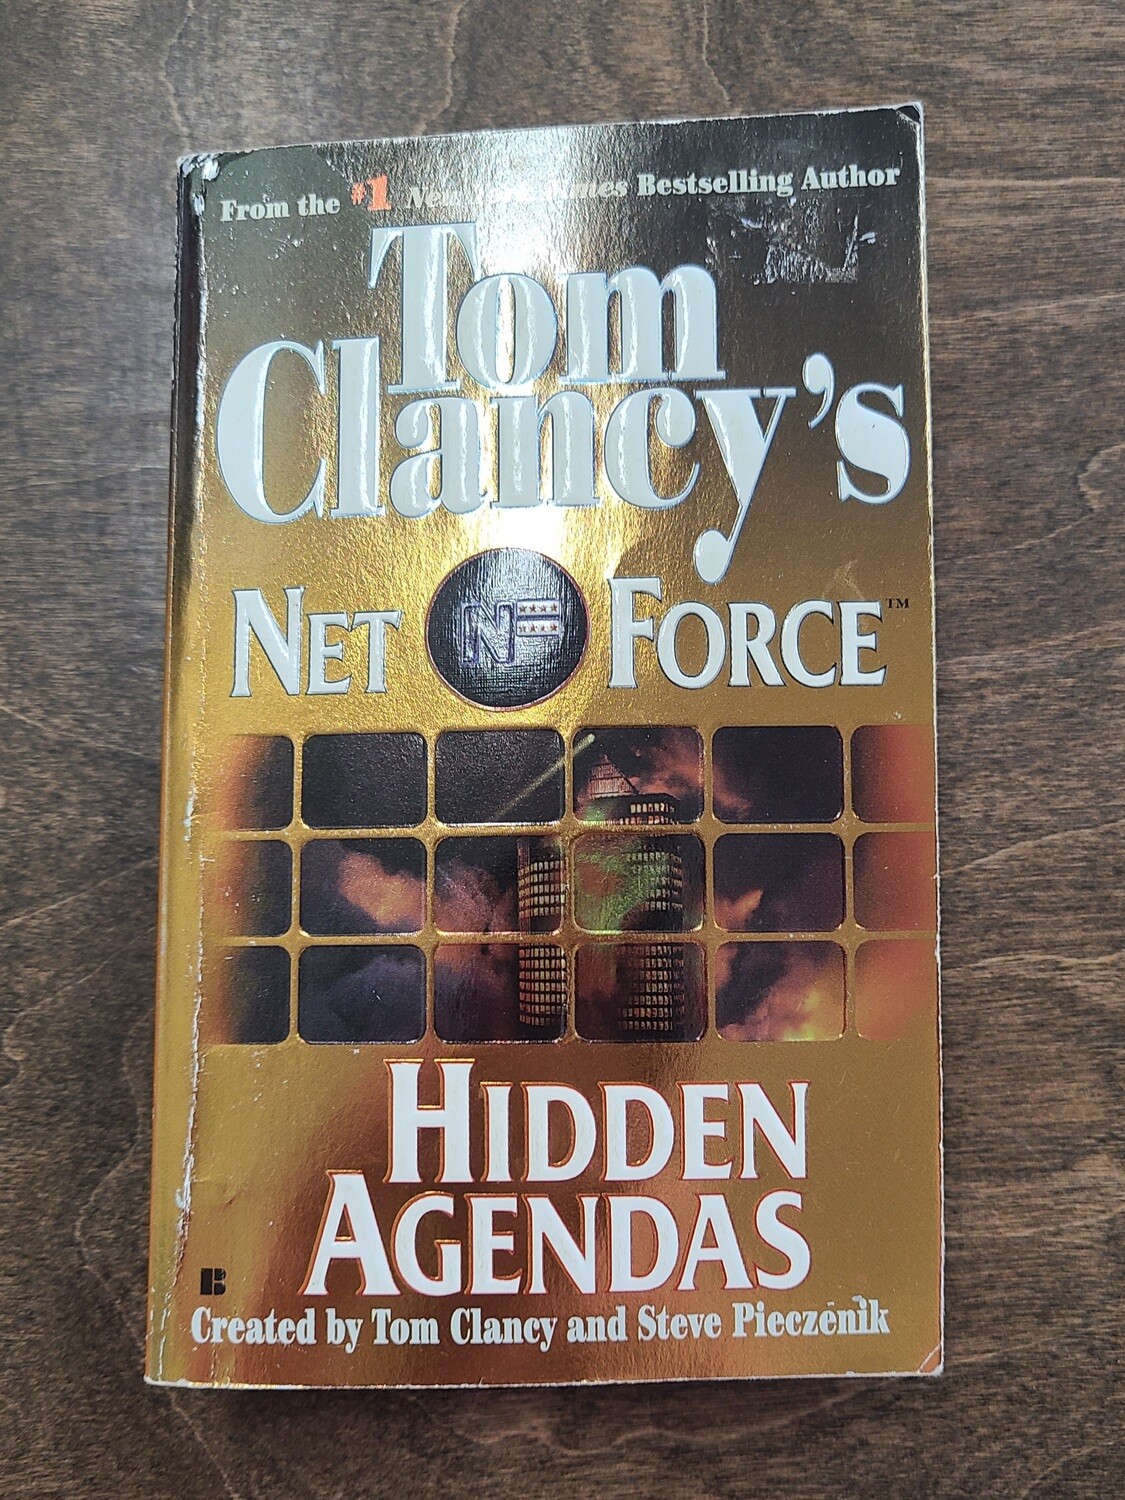 Net Force: Hidden Agendas by Tom Clancy and Steve Pieczenik